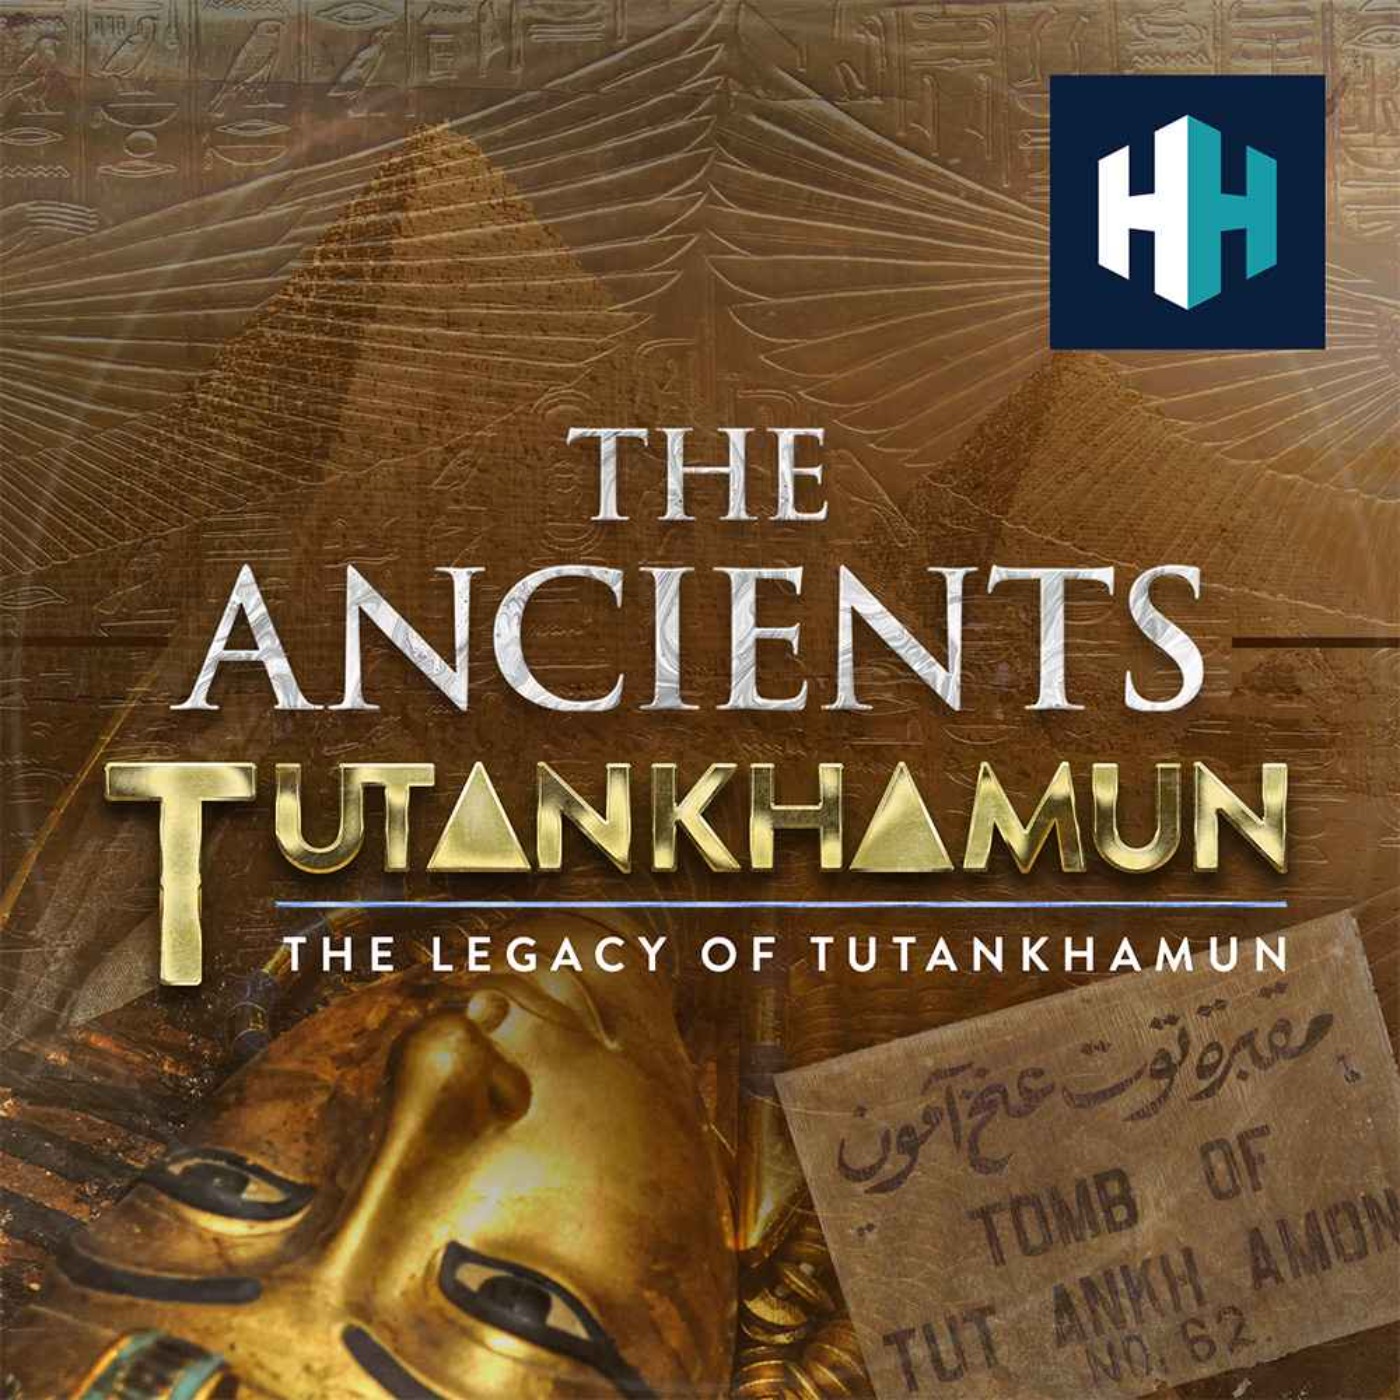 The Legacy of Tutankhamun